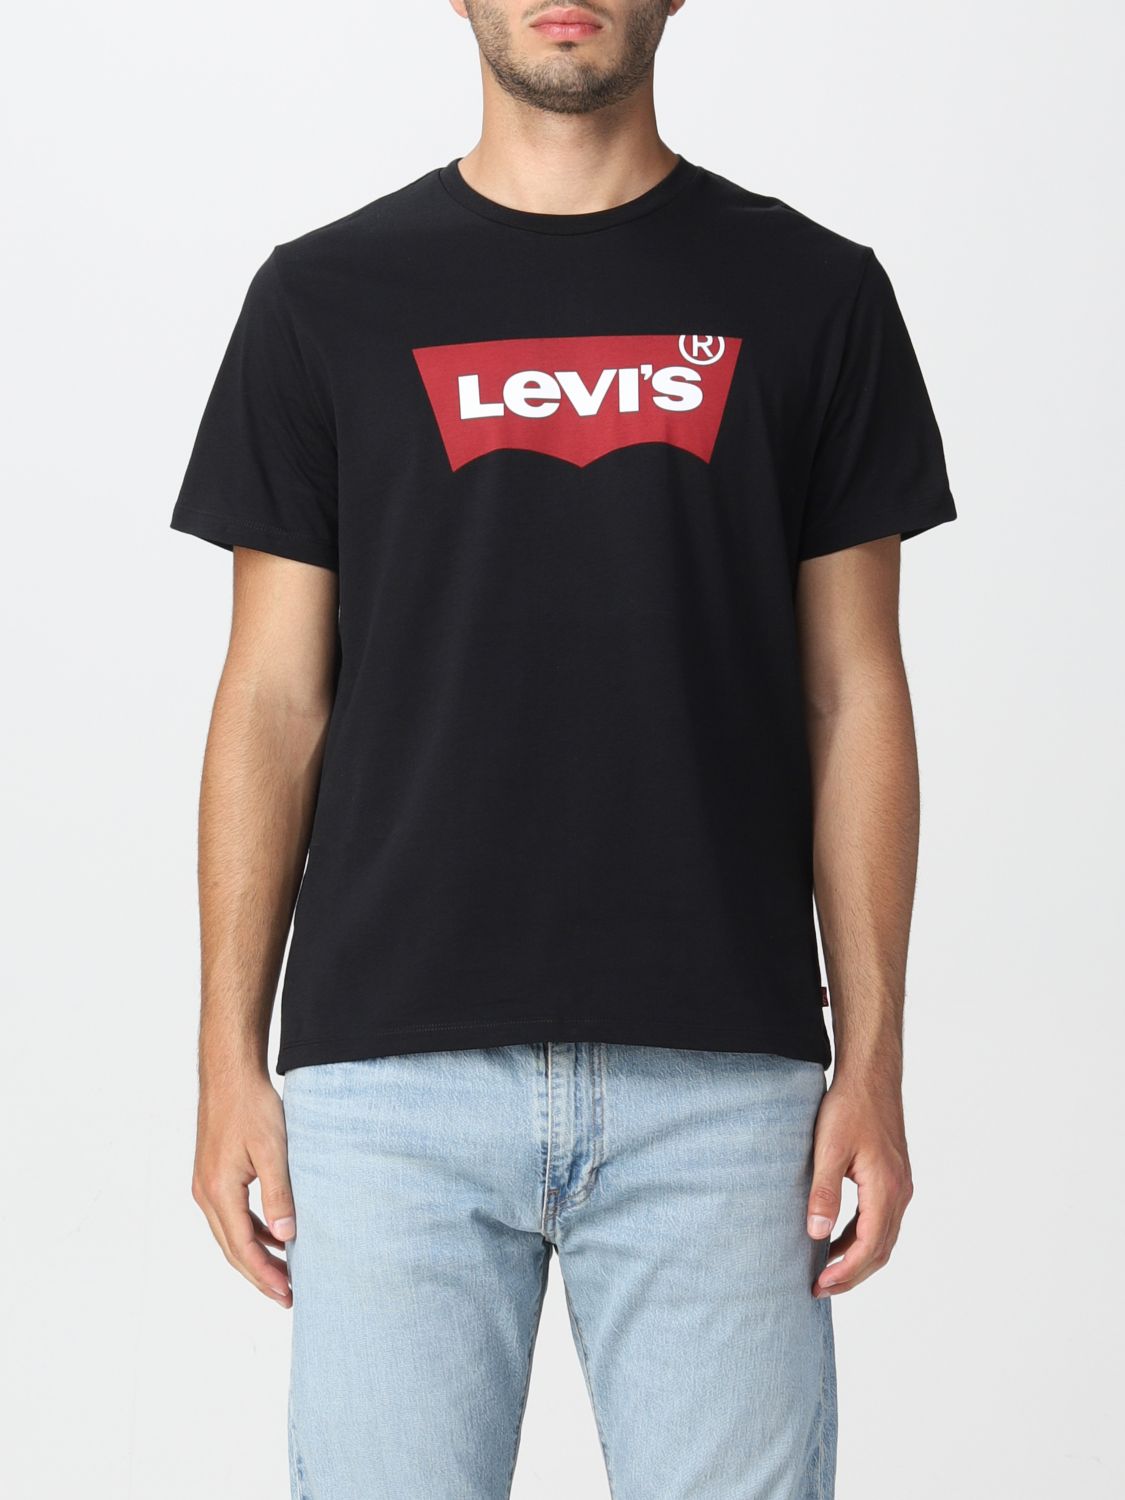 smeren Kostuum Succesvol LEVI'S: t-shirt for man - Black | Levi's t-shirt 177830137 online on  GIGLIO.COM